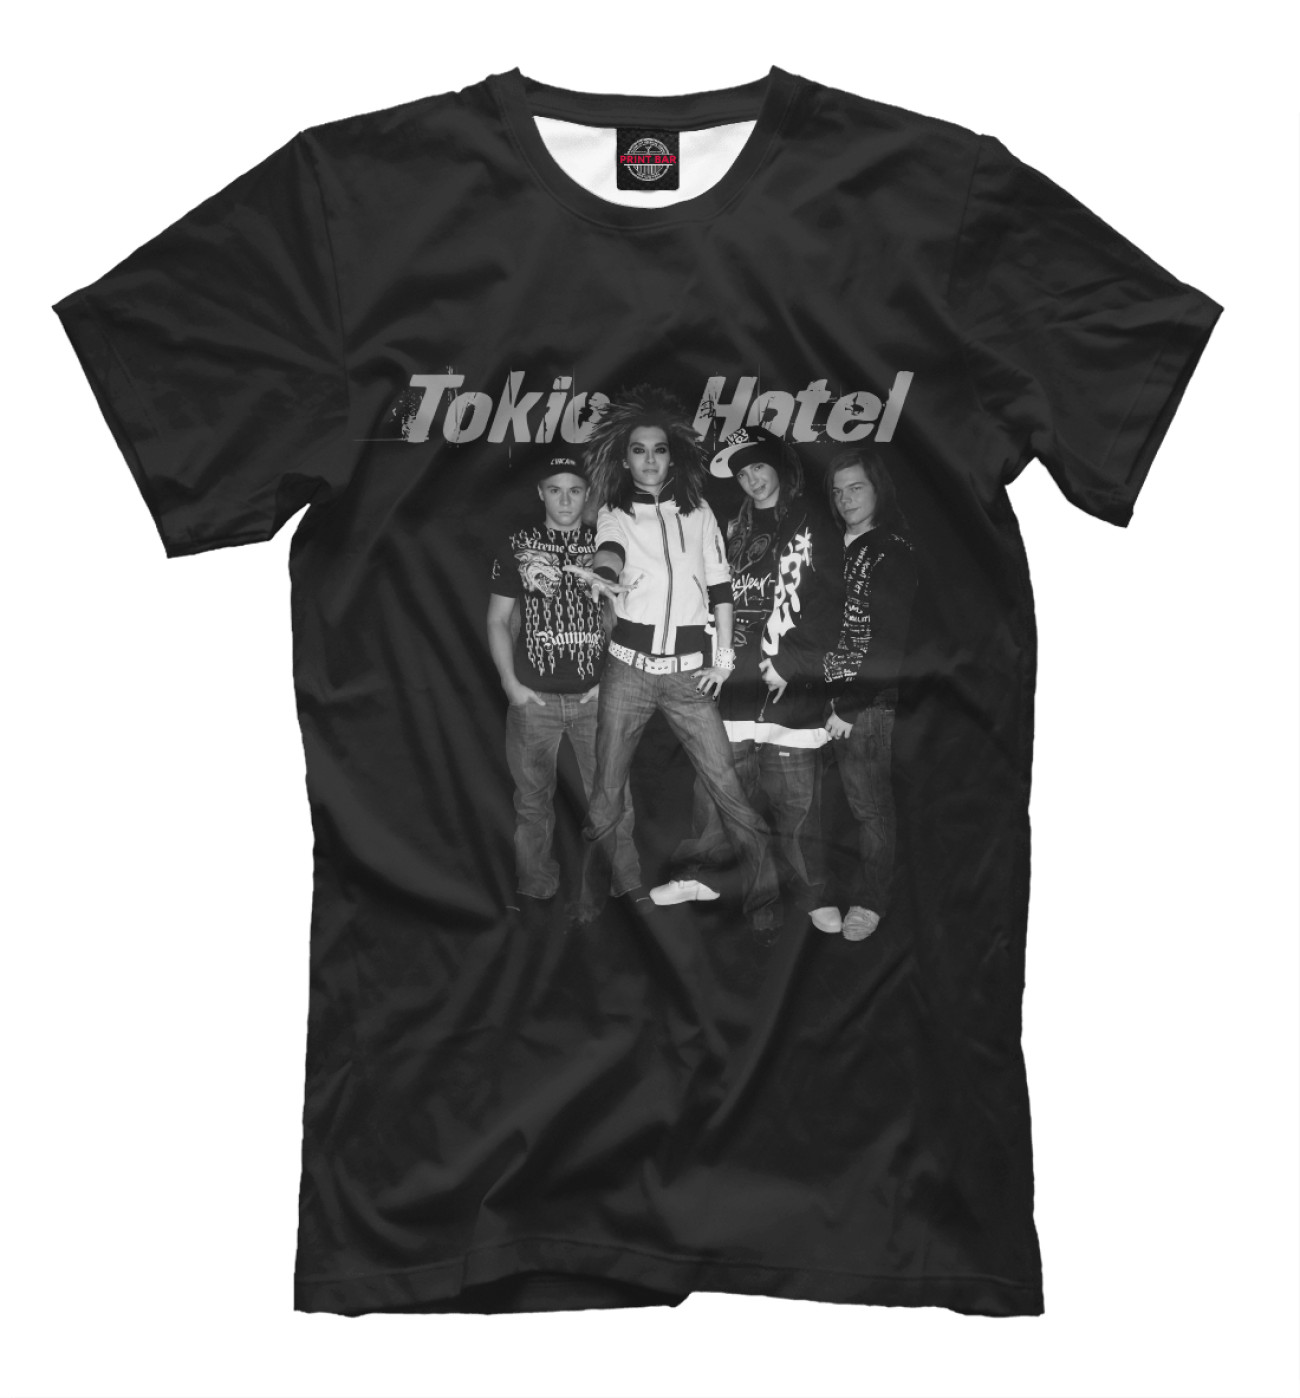 Мужская Футболка Tokio Hotel, артикул: THT-741484-fut-2